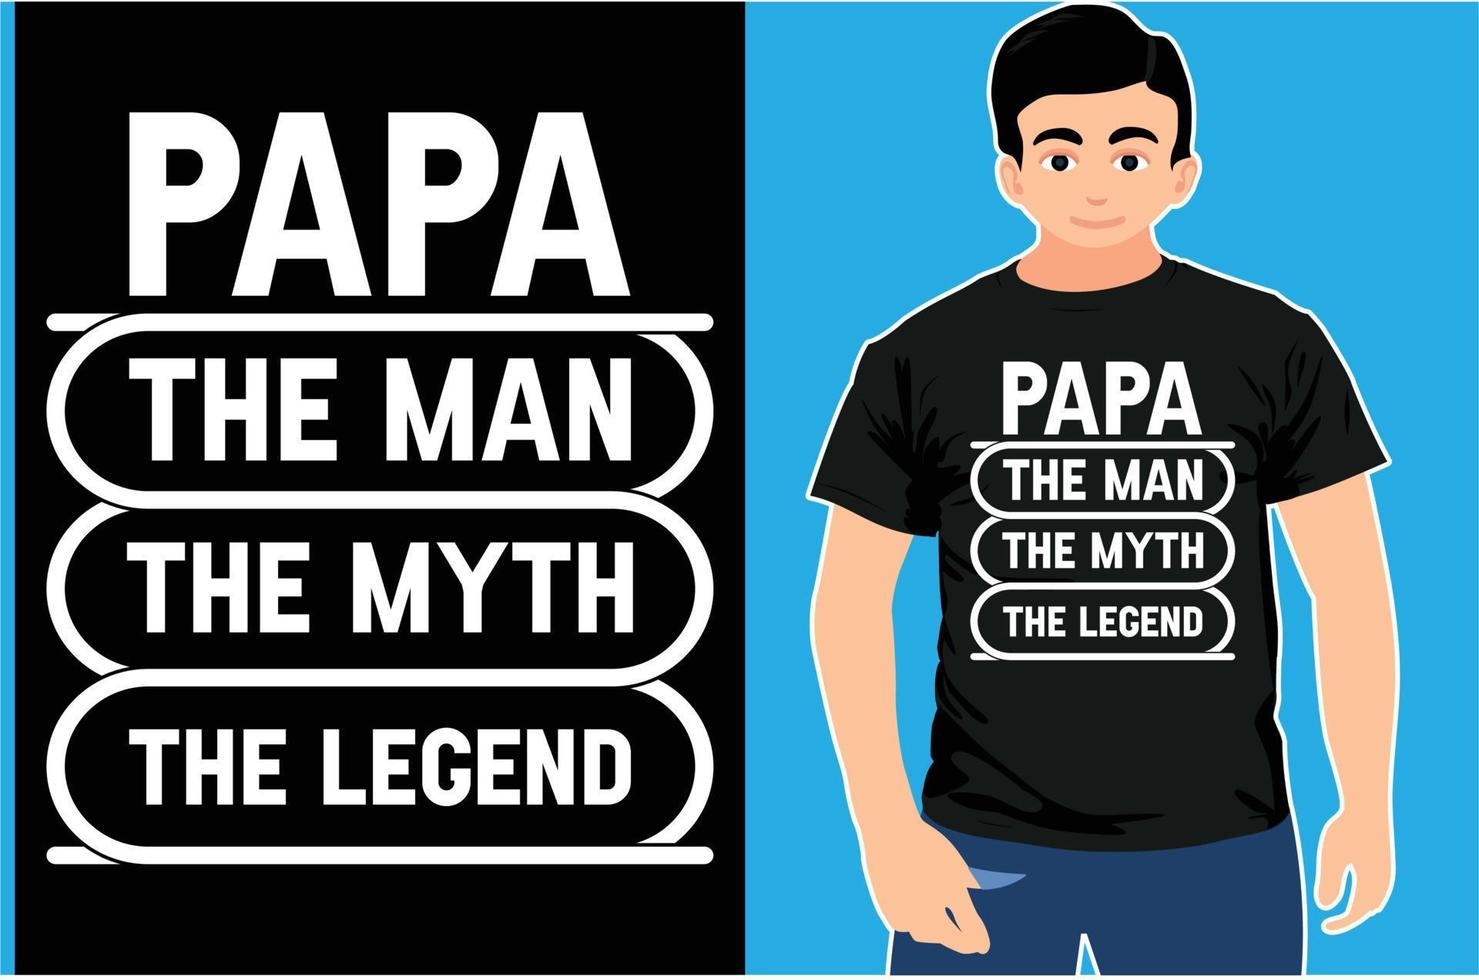 papa, de man de mythe de legende t-shirt.typography t-shirtontwerp. vaderdag cadeau. vector